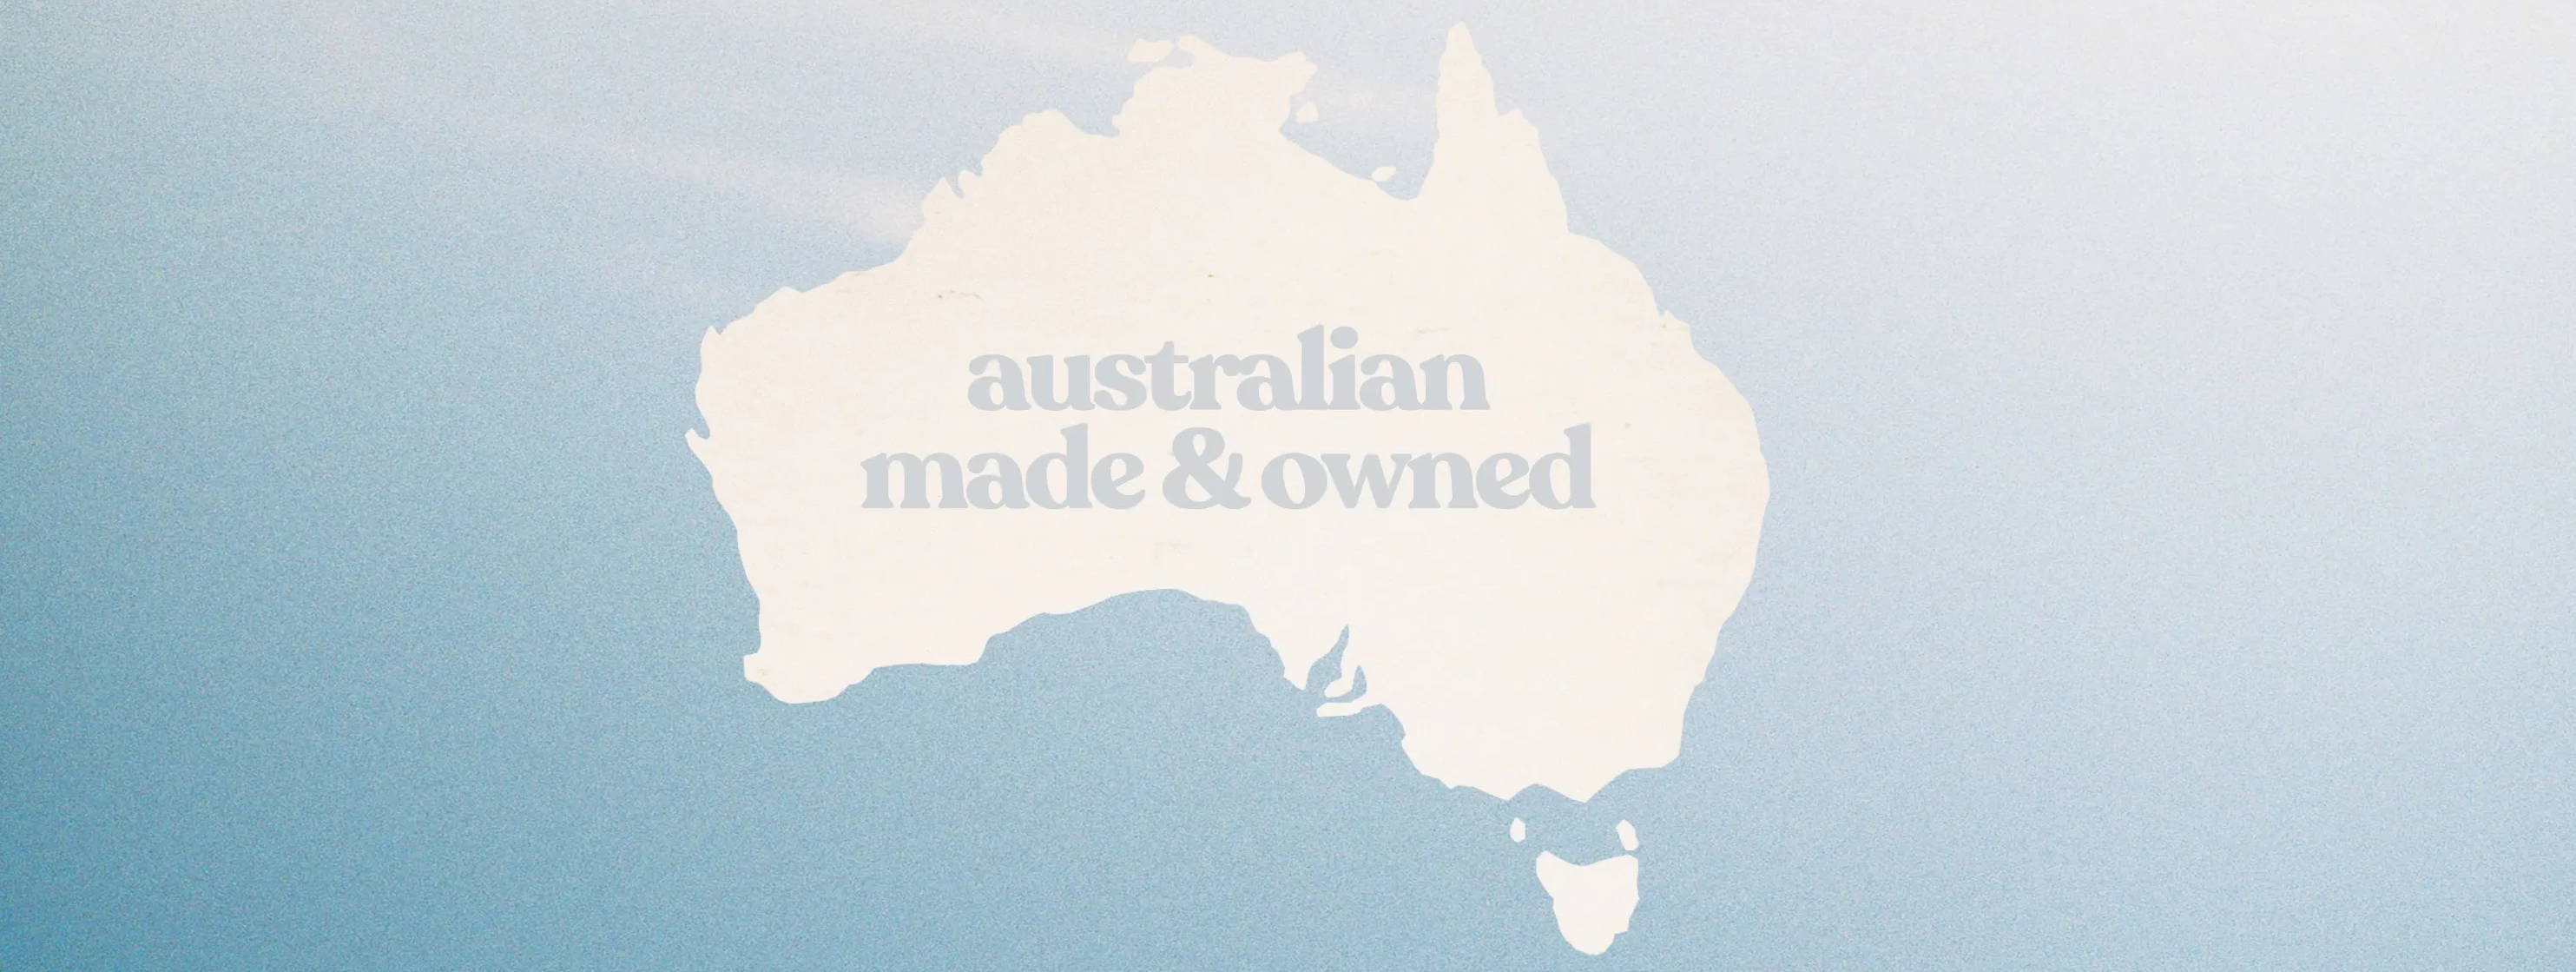 5 Reasons Why Australian Made Matters